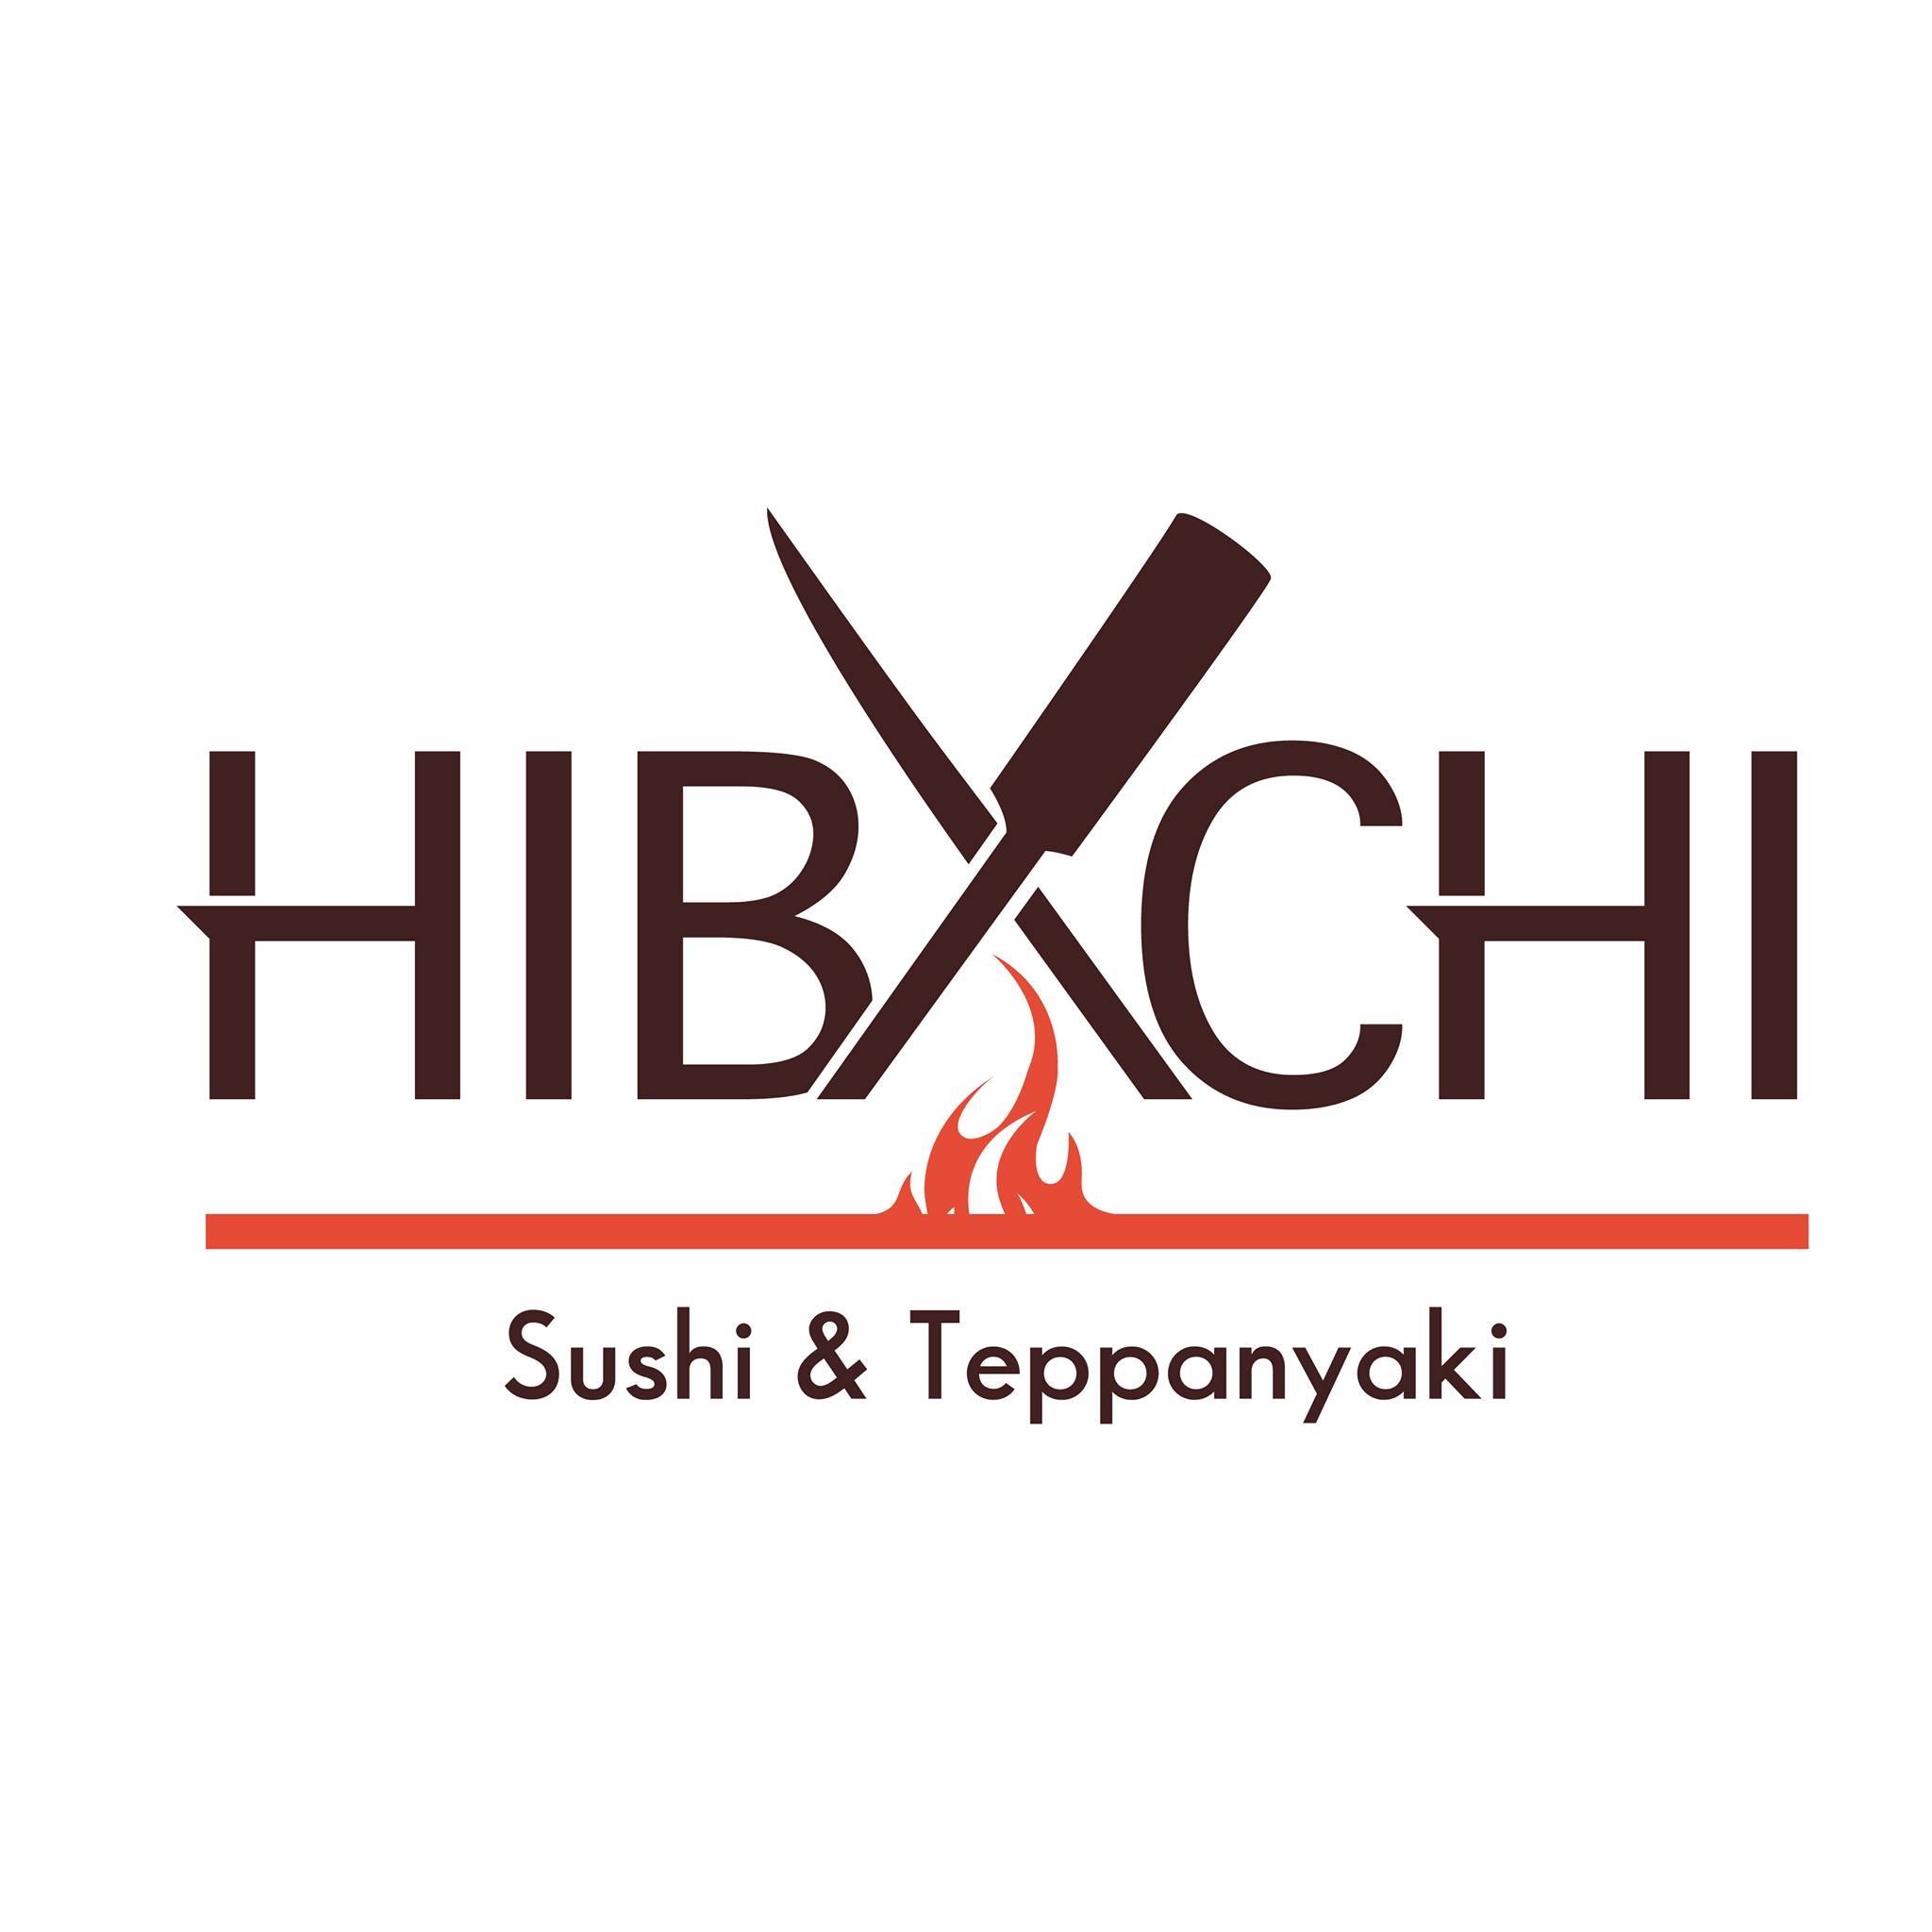 Hibachi - Coming Soon in UAE